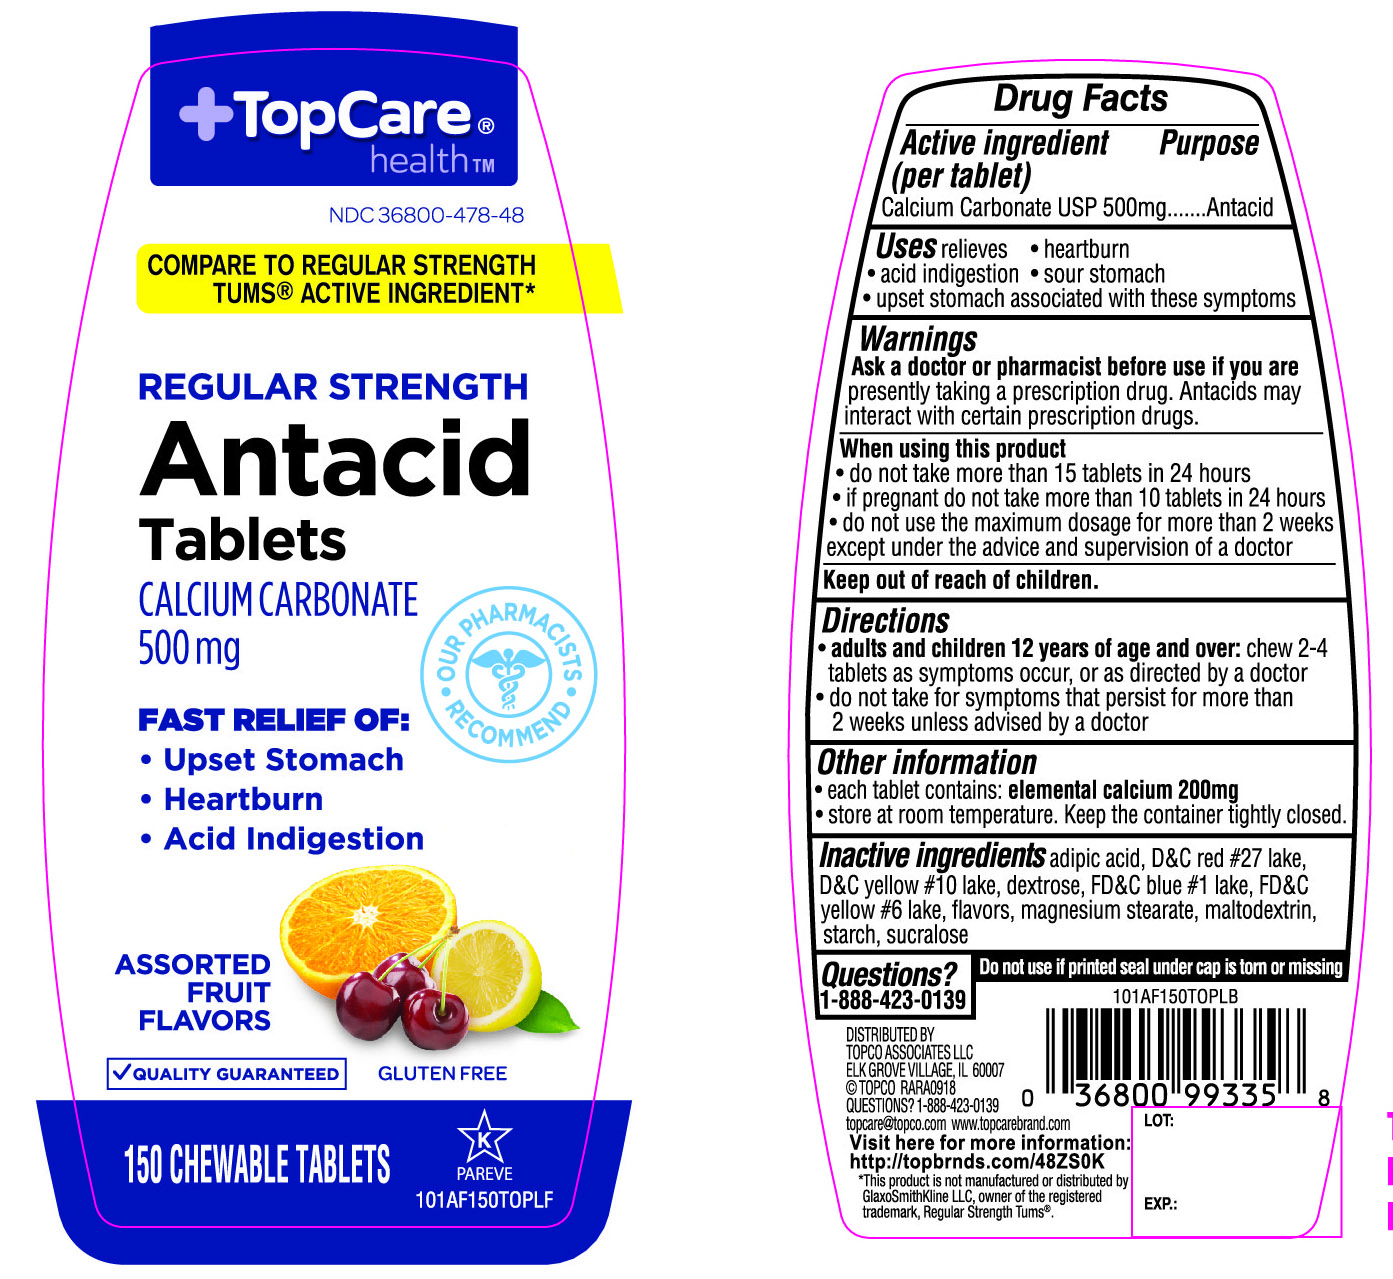 TopCare Regular Strength Antacid Calcium Carbonate Assorted Fruit Flavors